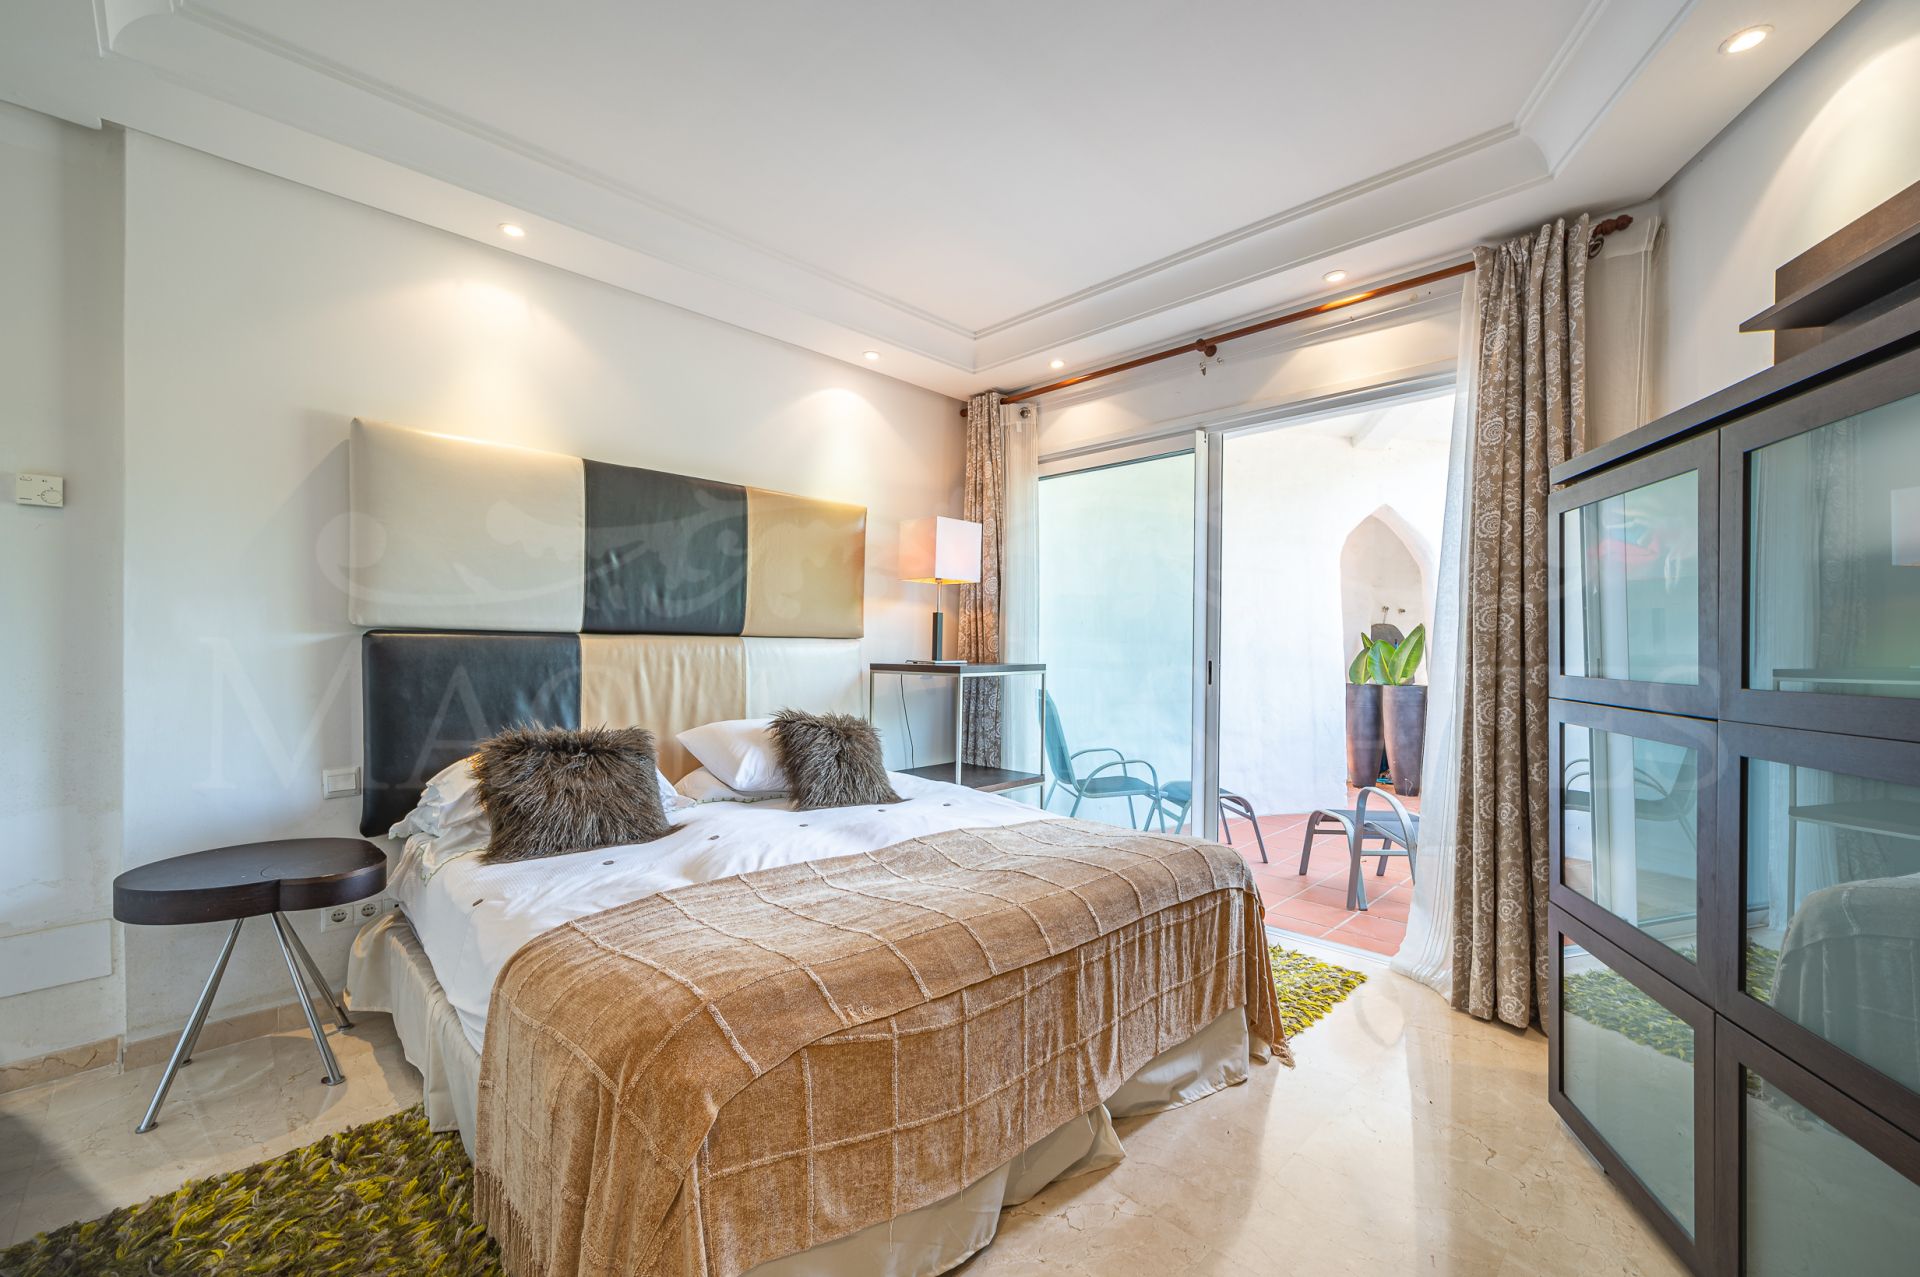 4-bedroom apartment on the beachfront, in Puerto Banús, Marbella.